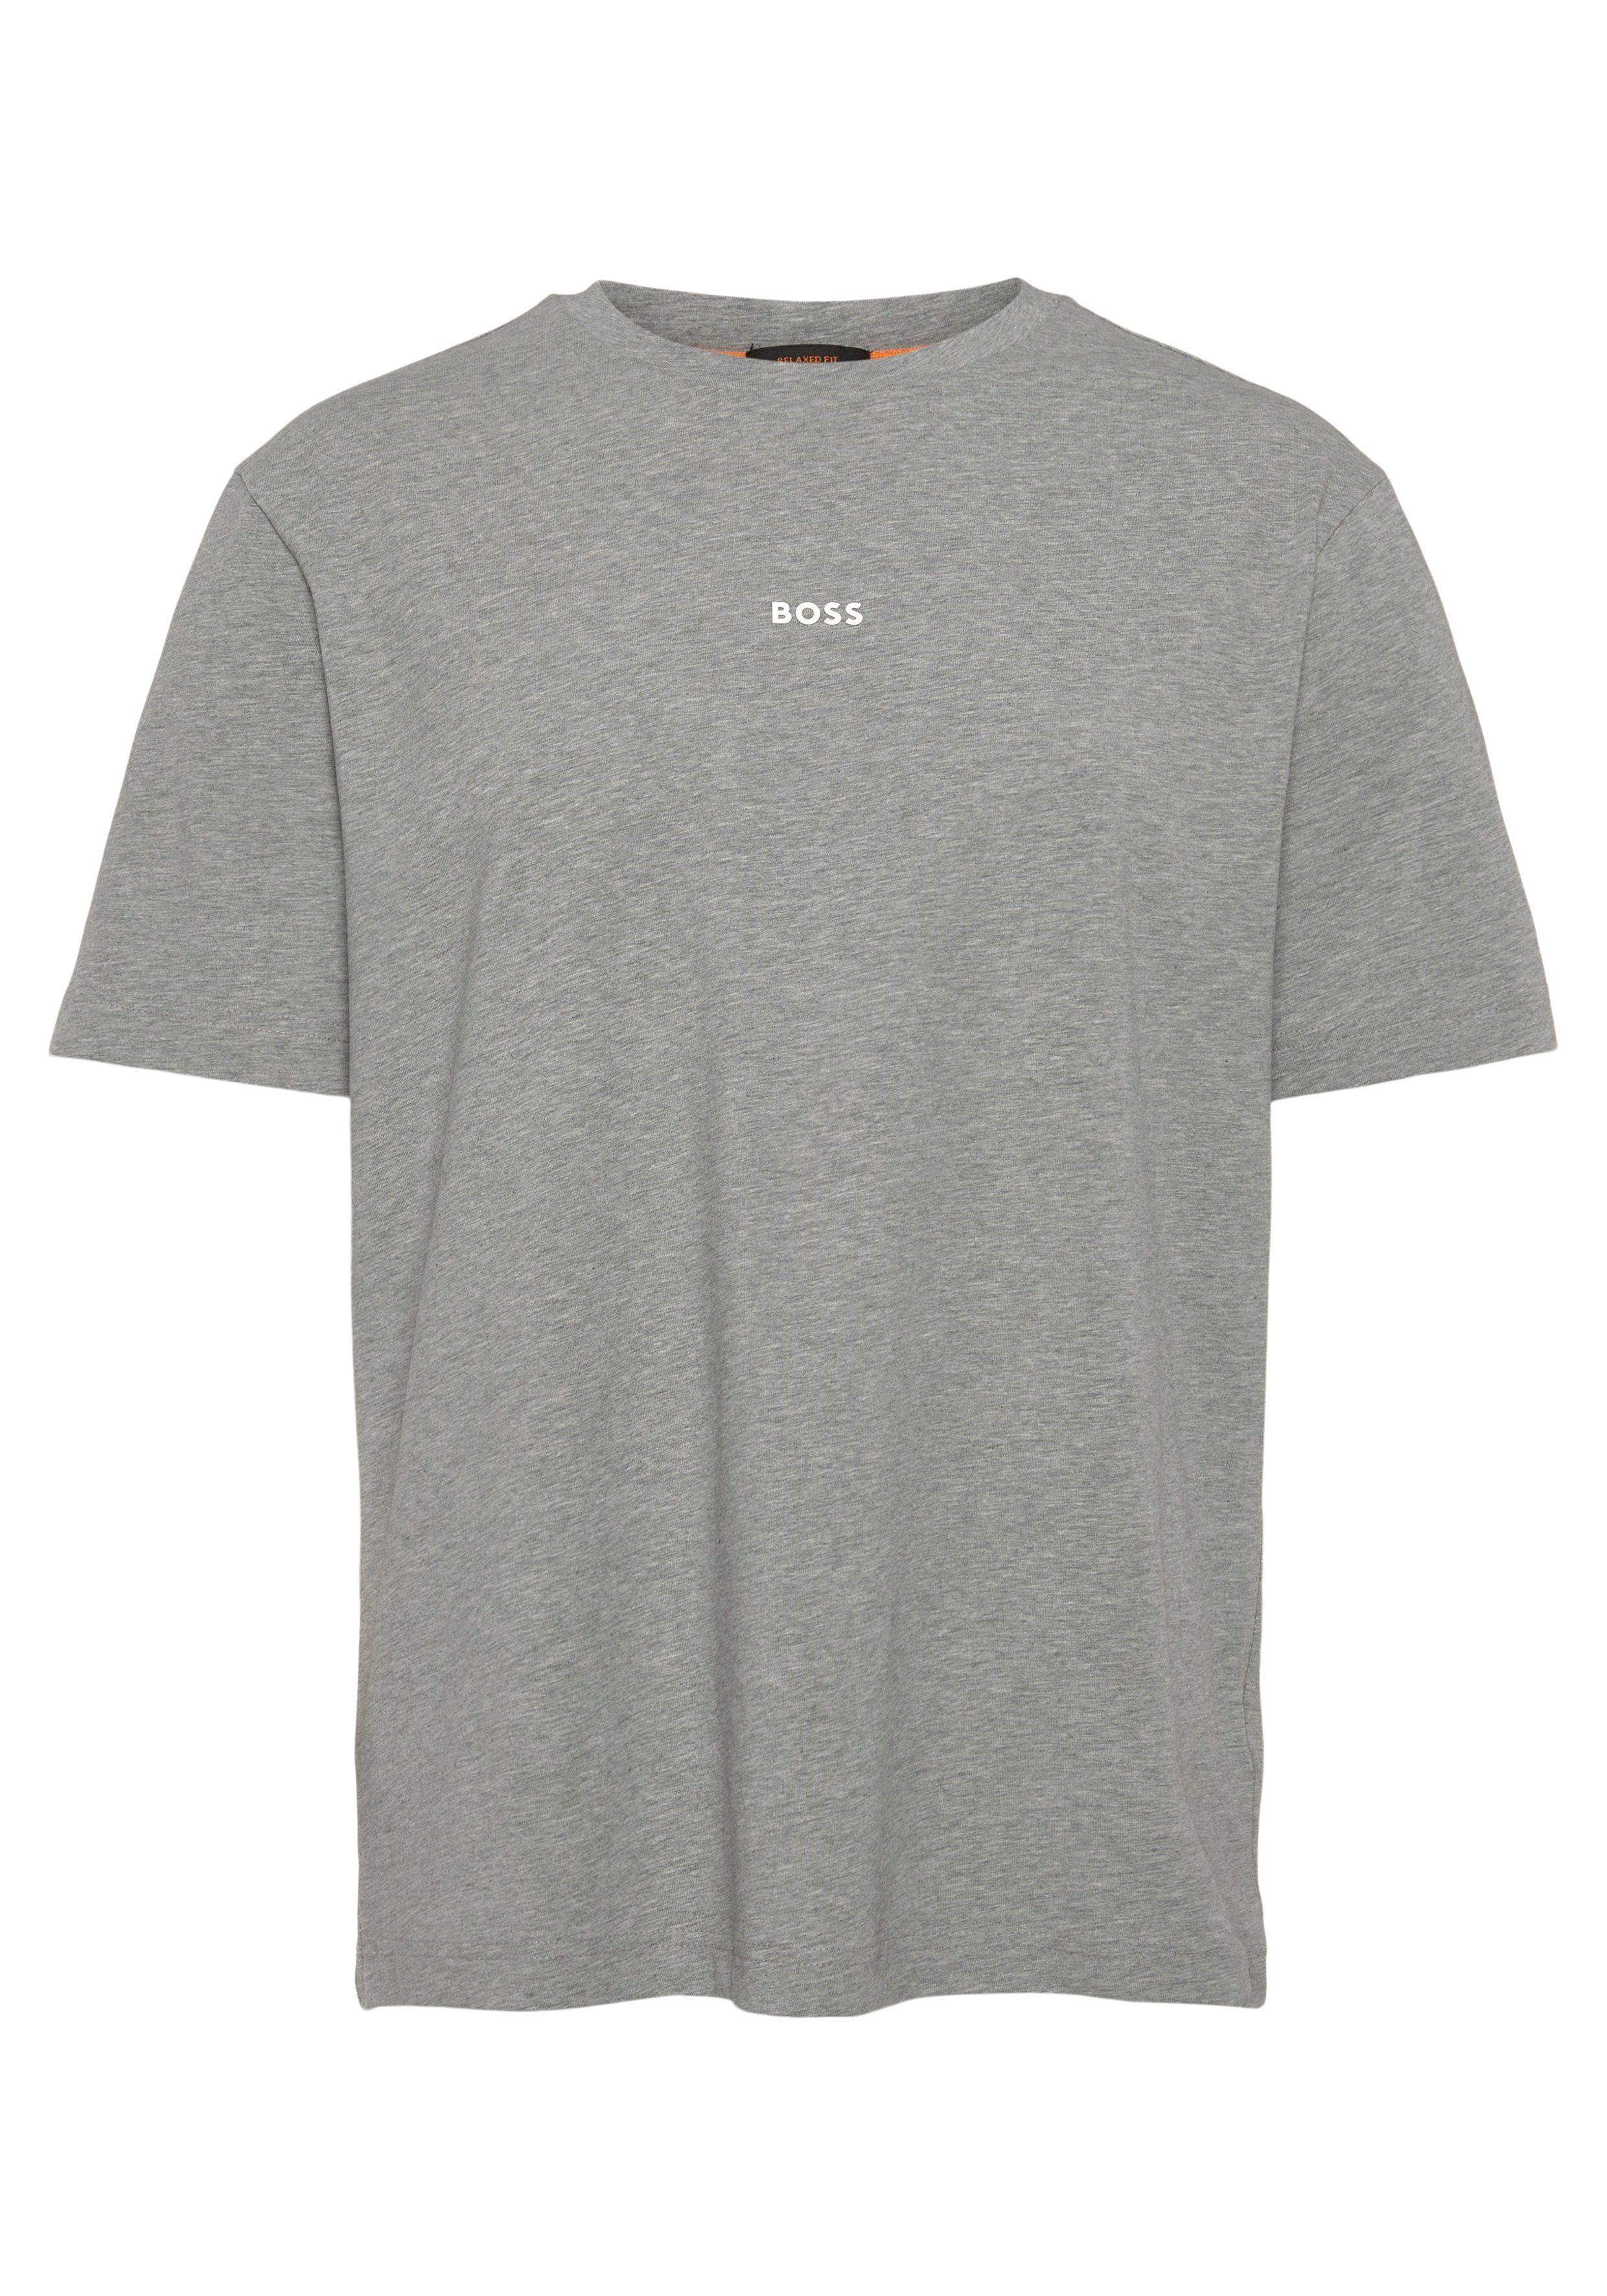 ORANGE T-Shirt Grey Rundhalsausschnitt Light/Pastel BOSS TChup mit 051